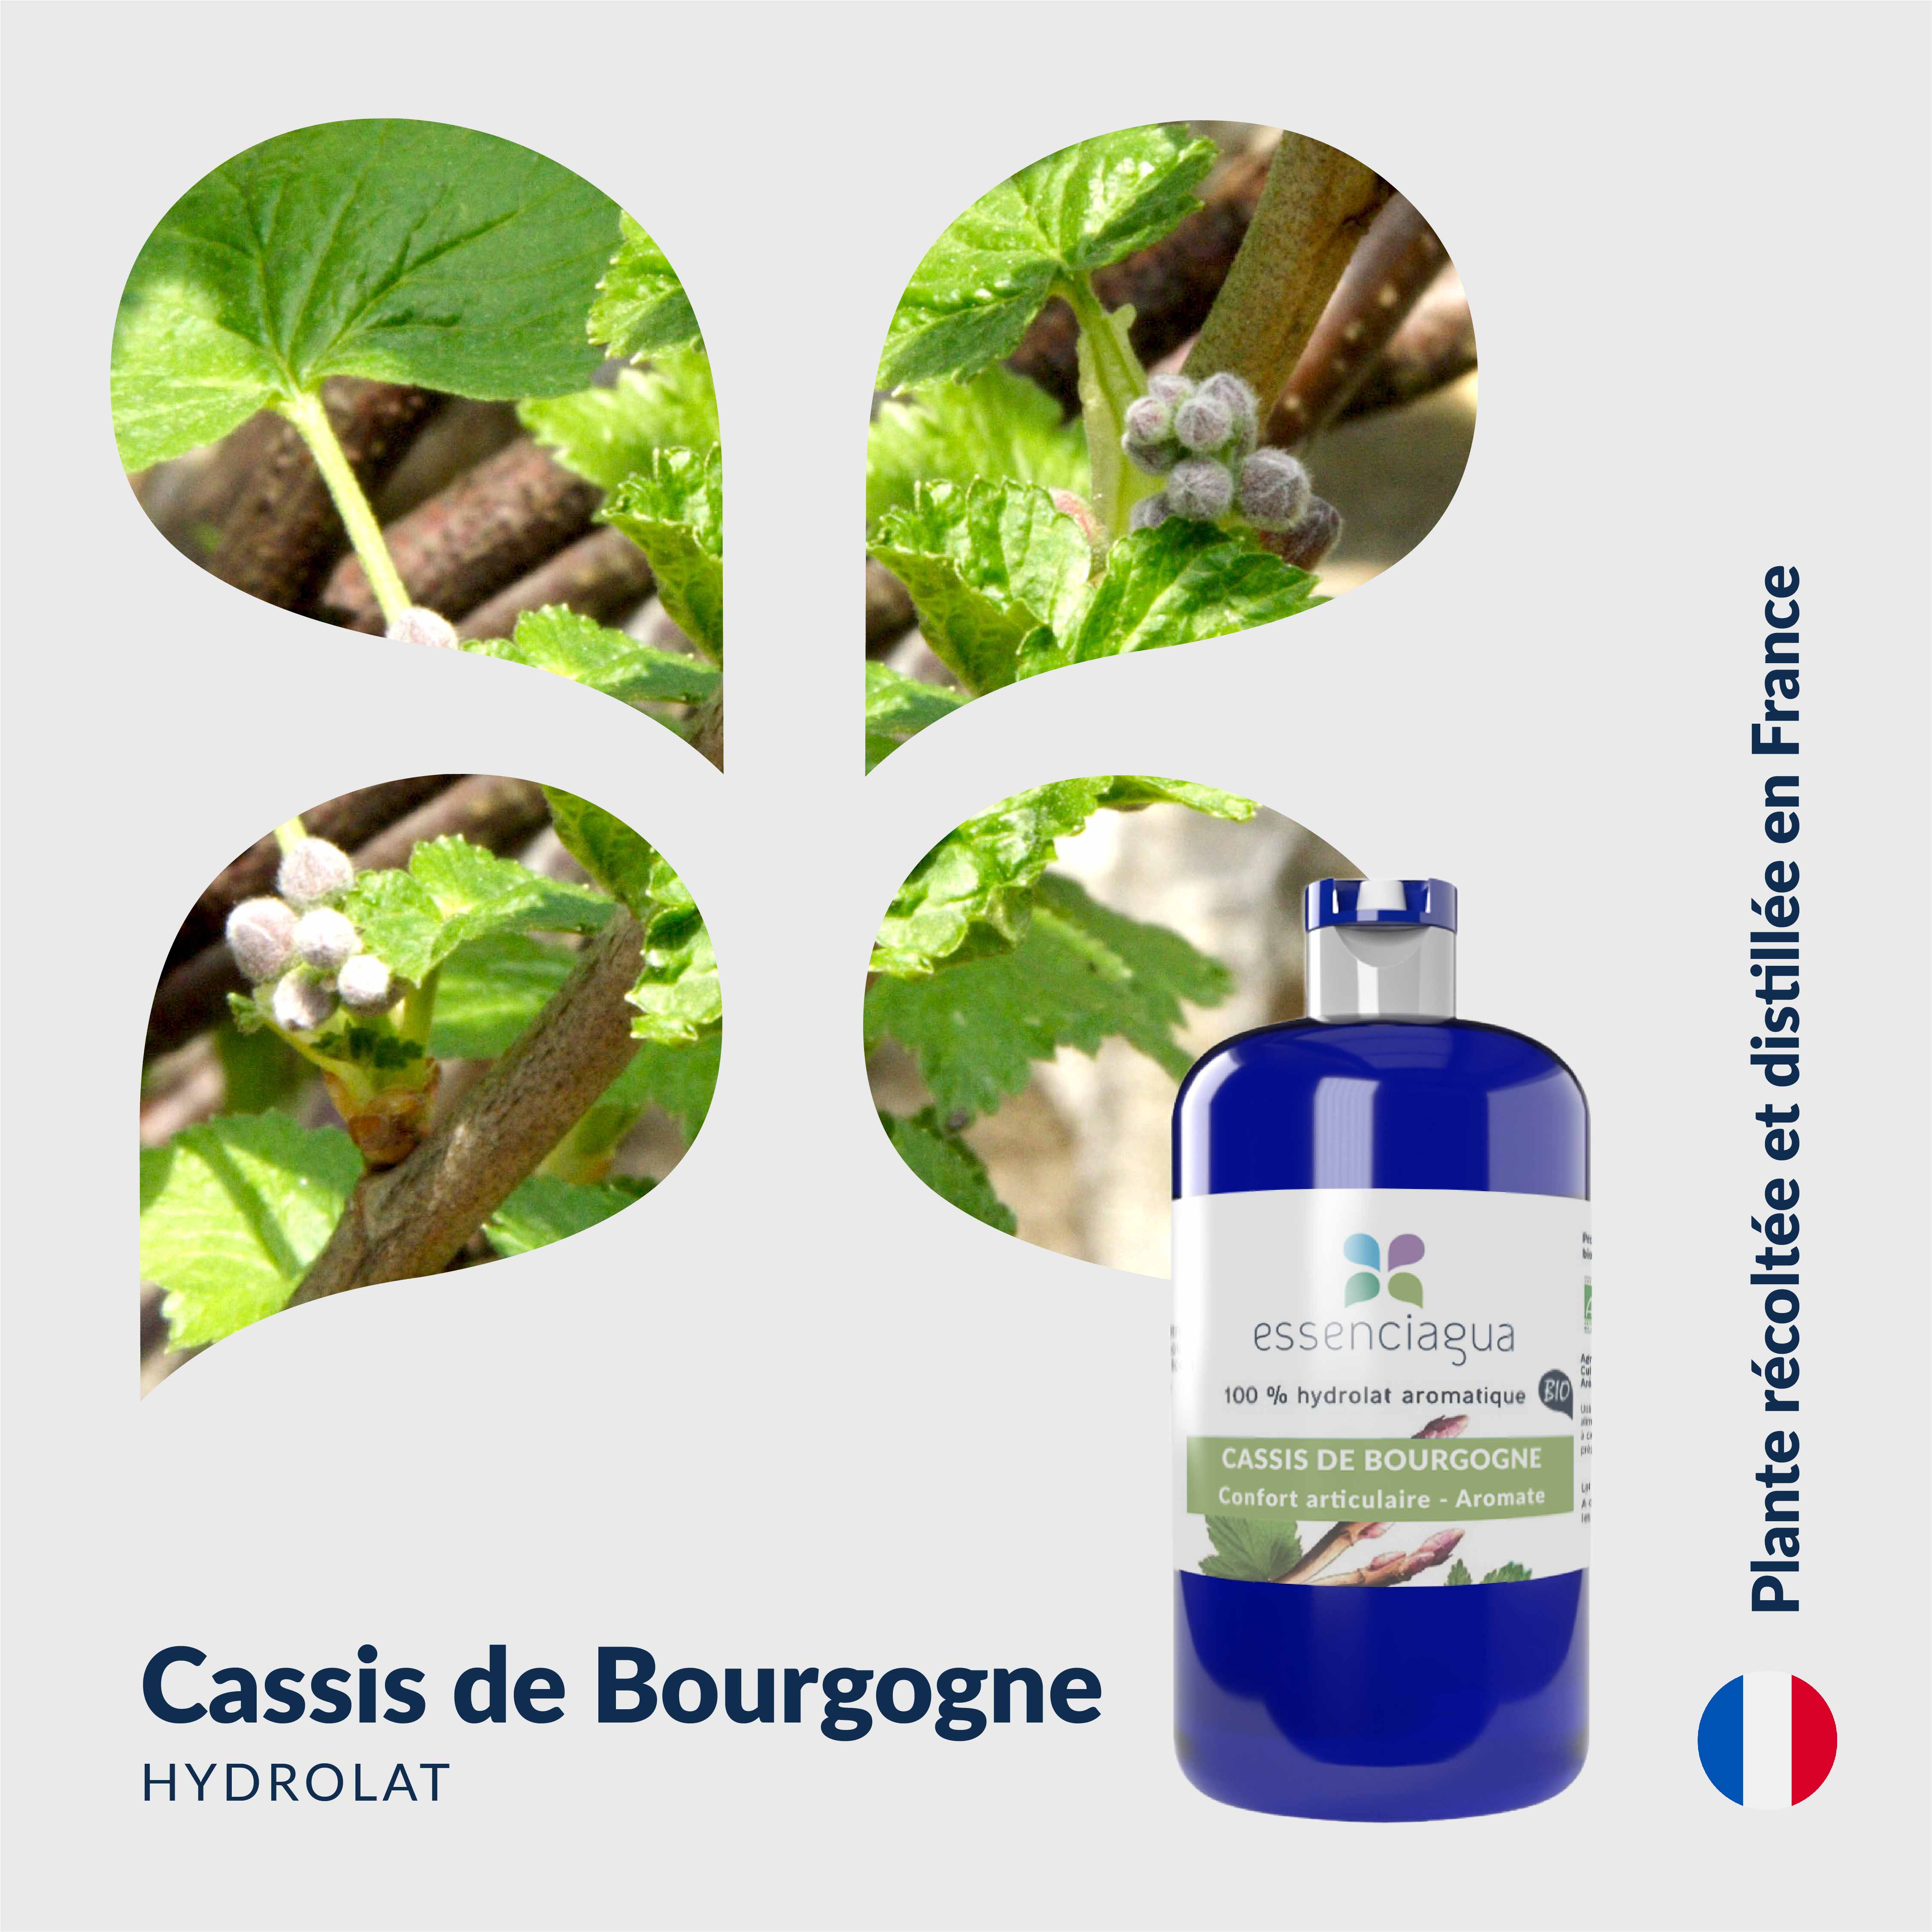 Focus de notre hydrolat Cassis de Bourgogne